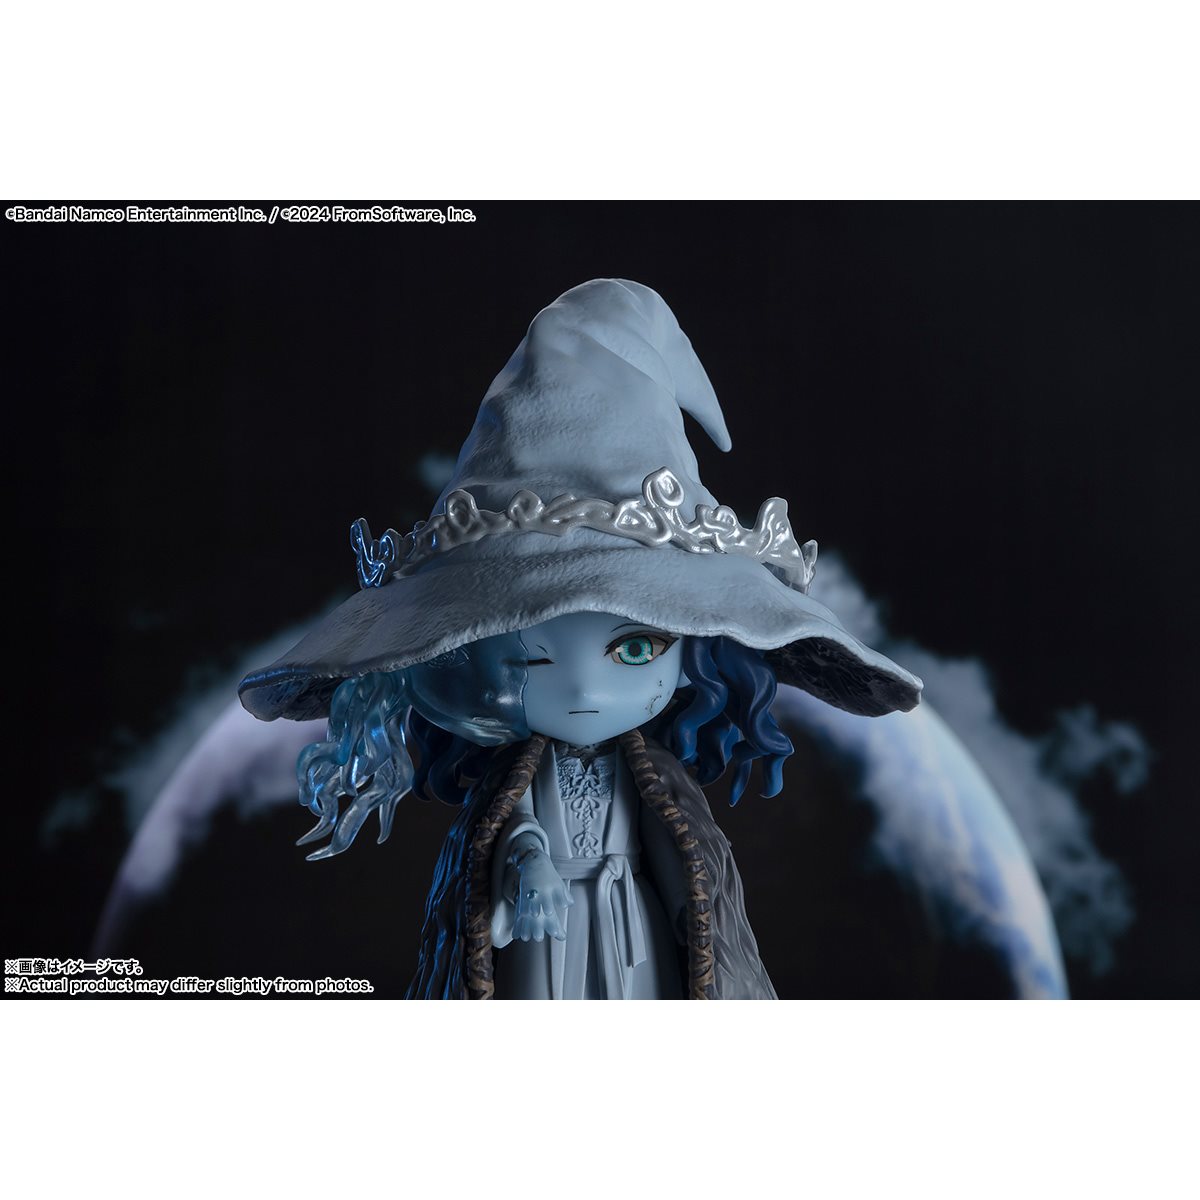 Bandai Tamashii Nations Figuarts Mini: Elden Ring - Ranni the Witch Minifigura